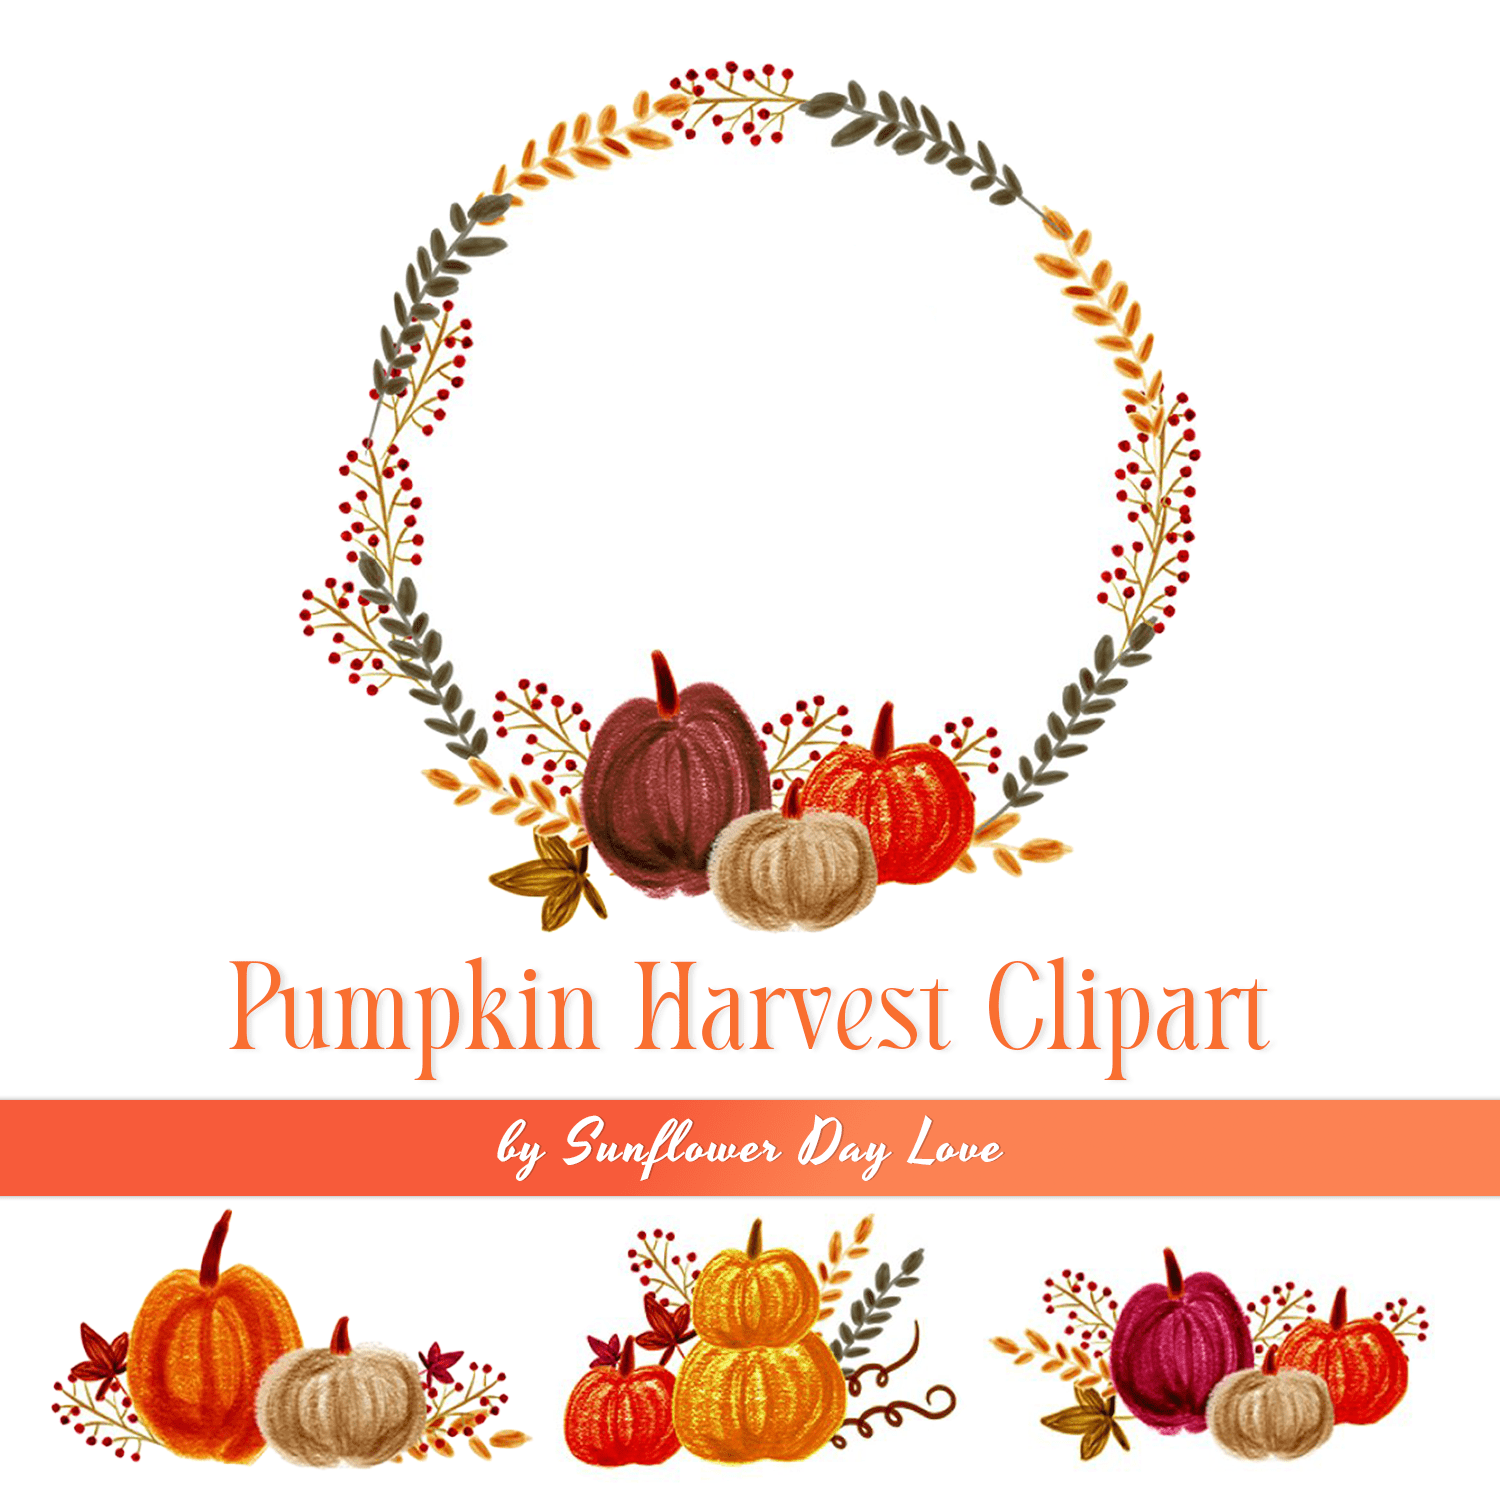 Pumpkin Harvest Clipart cover.